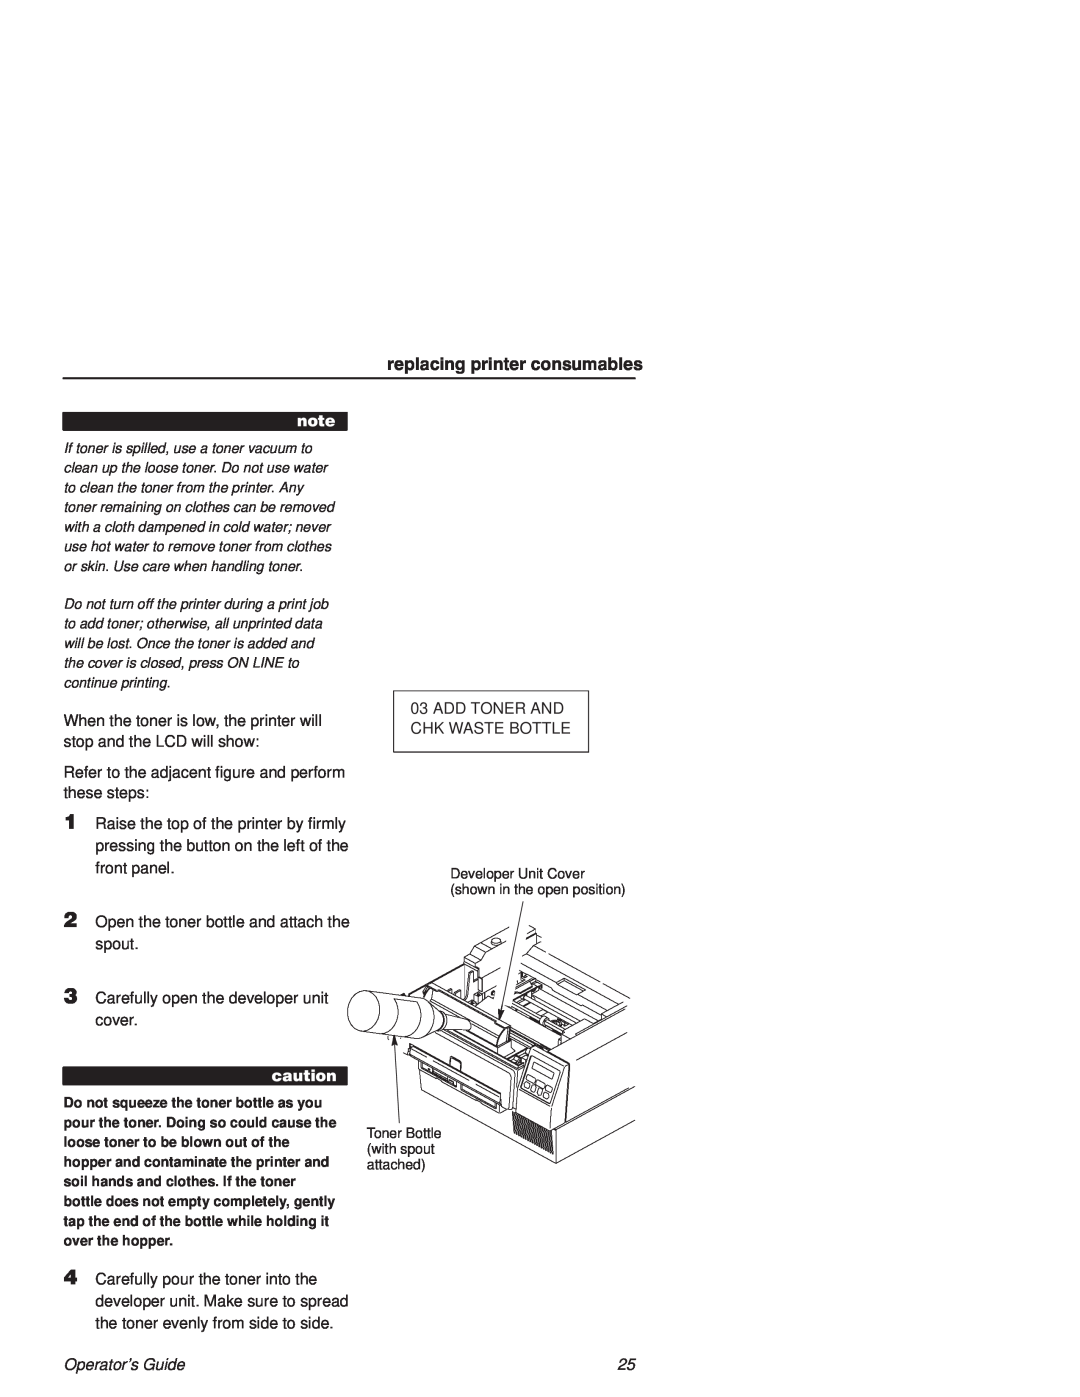 Printronix L1524 manual replacing printer consumables, Operators Guide, Developer Unit Cover shown in the open position 